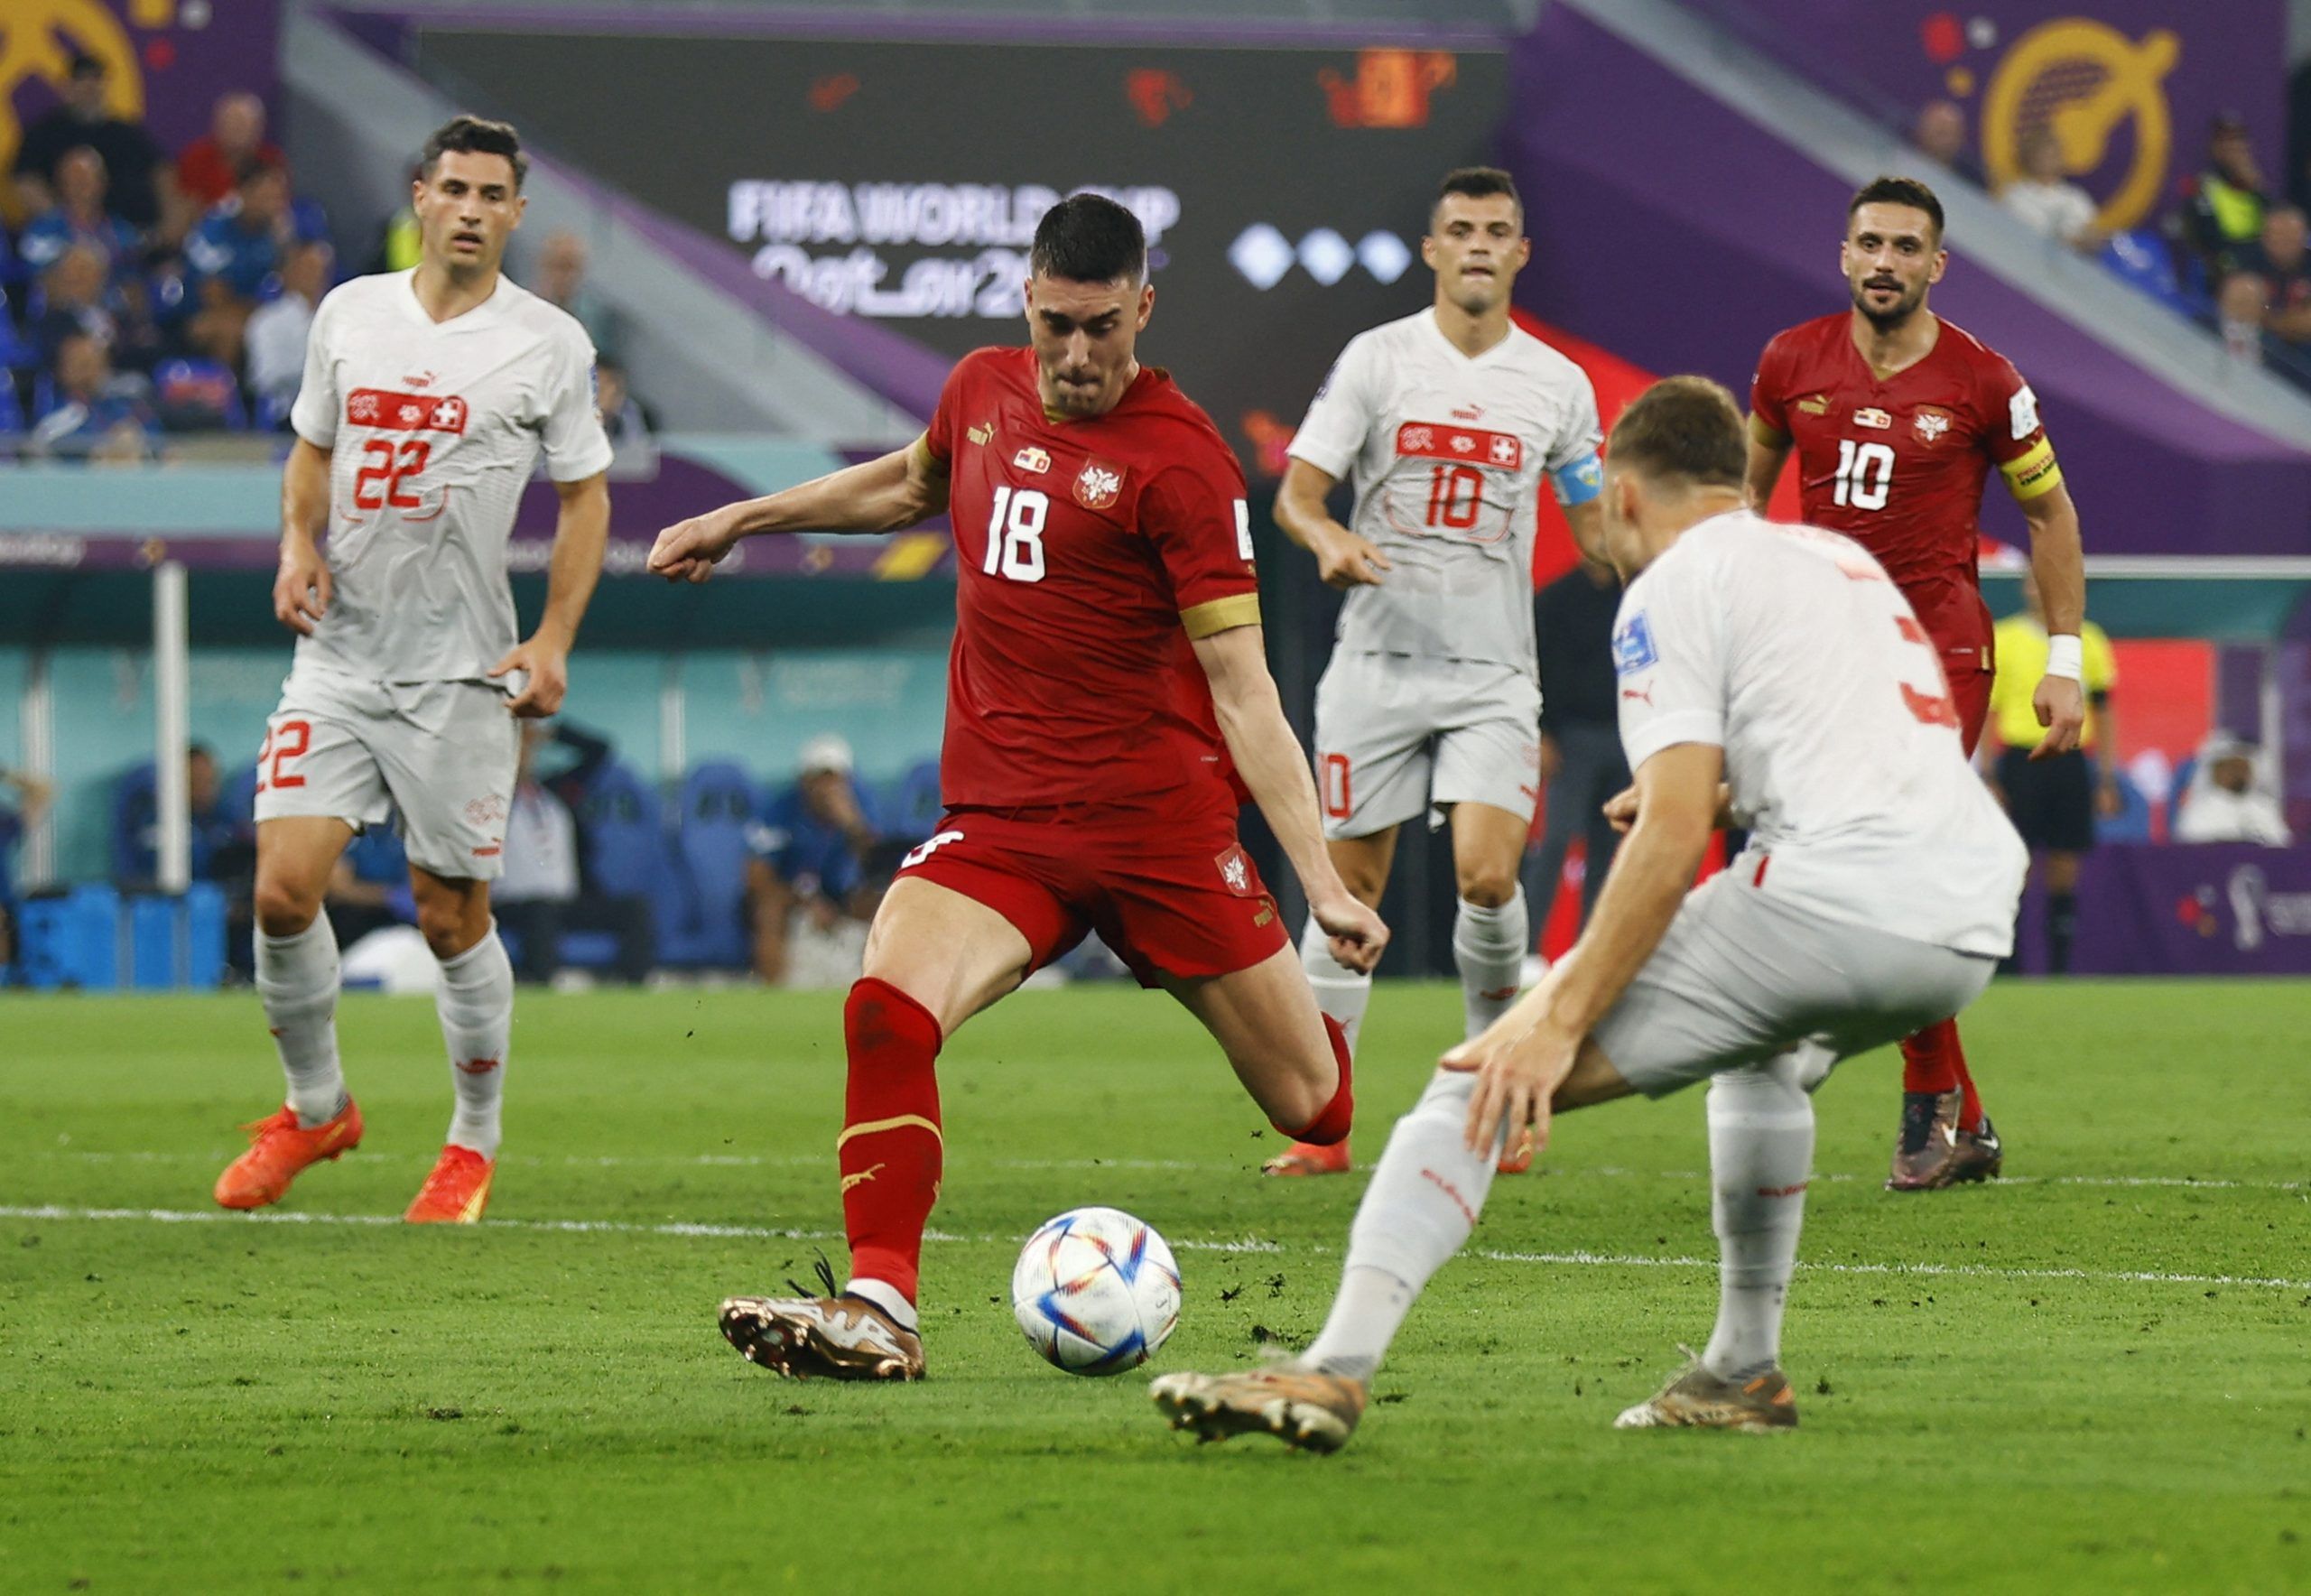 Soccer Football - FIFA World Cup Qatar 2022 - Group G - Serbia v Switzerland - Stadium 974, Doha, Qatar - December 2, 2022 Serbia's Dusan Vlahovic scores their second goal REUTERS/Suhaib Salem